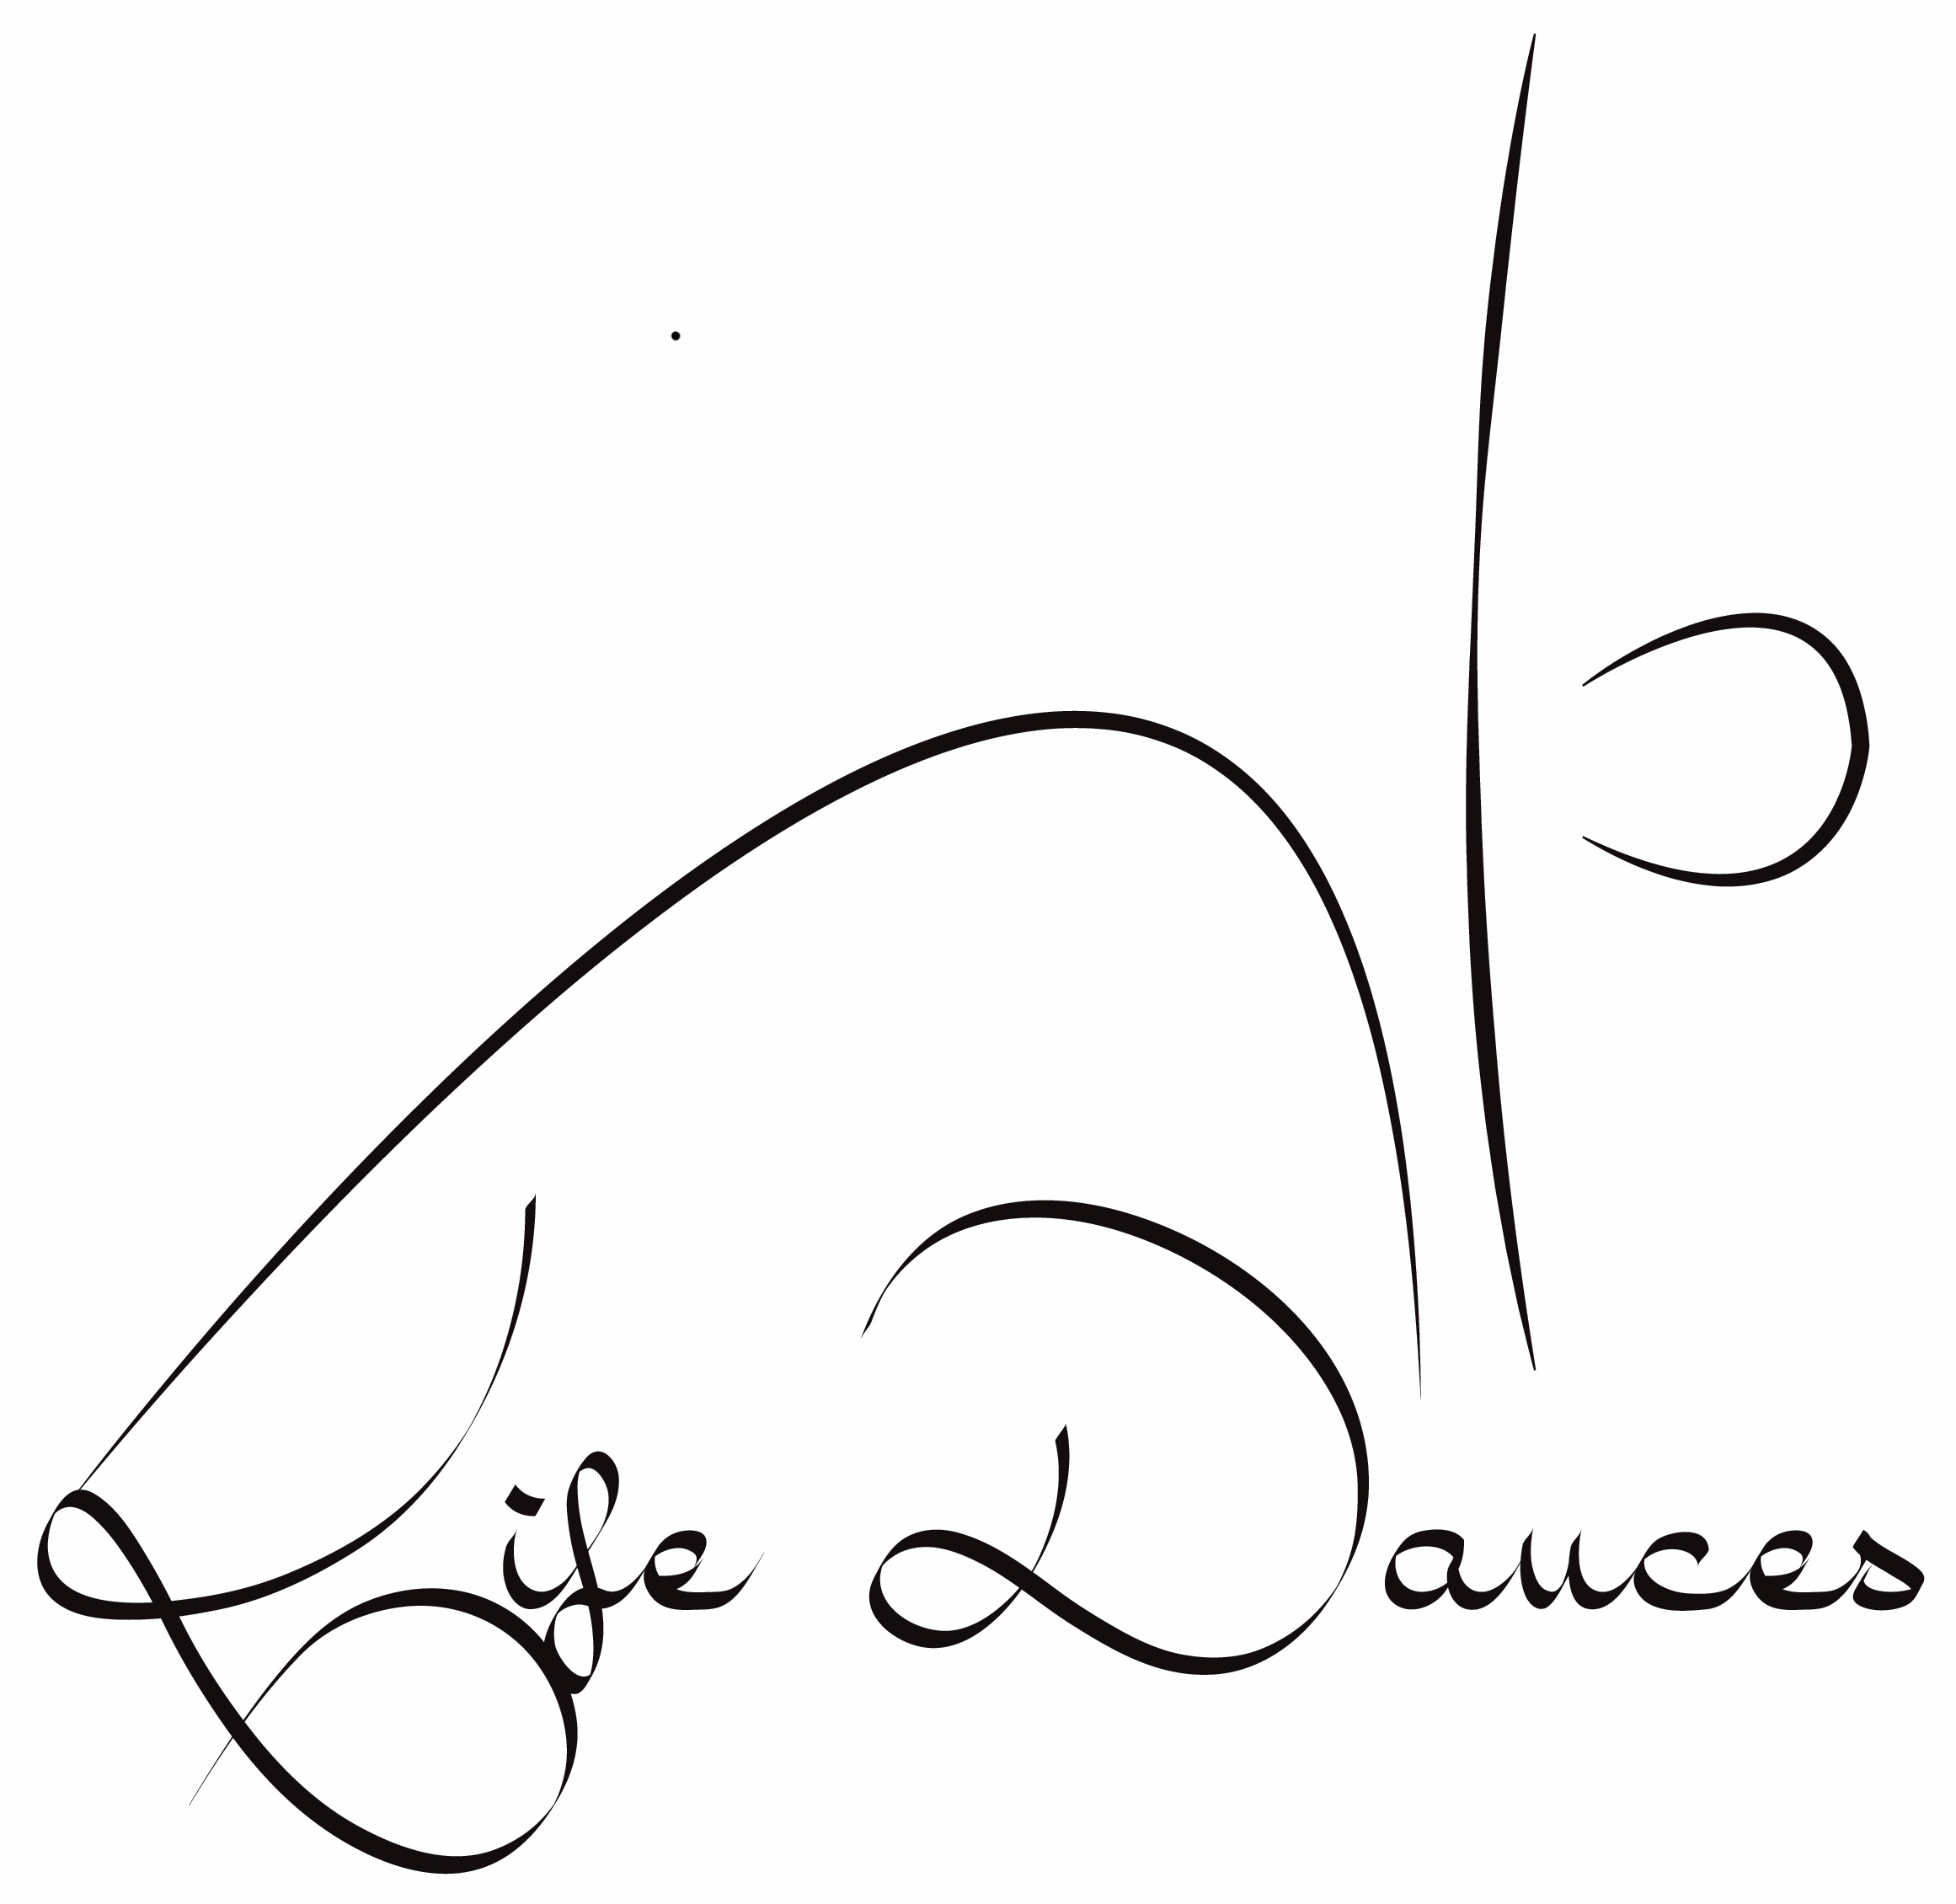 Life Dances